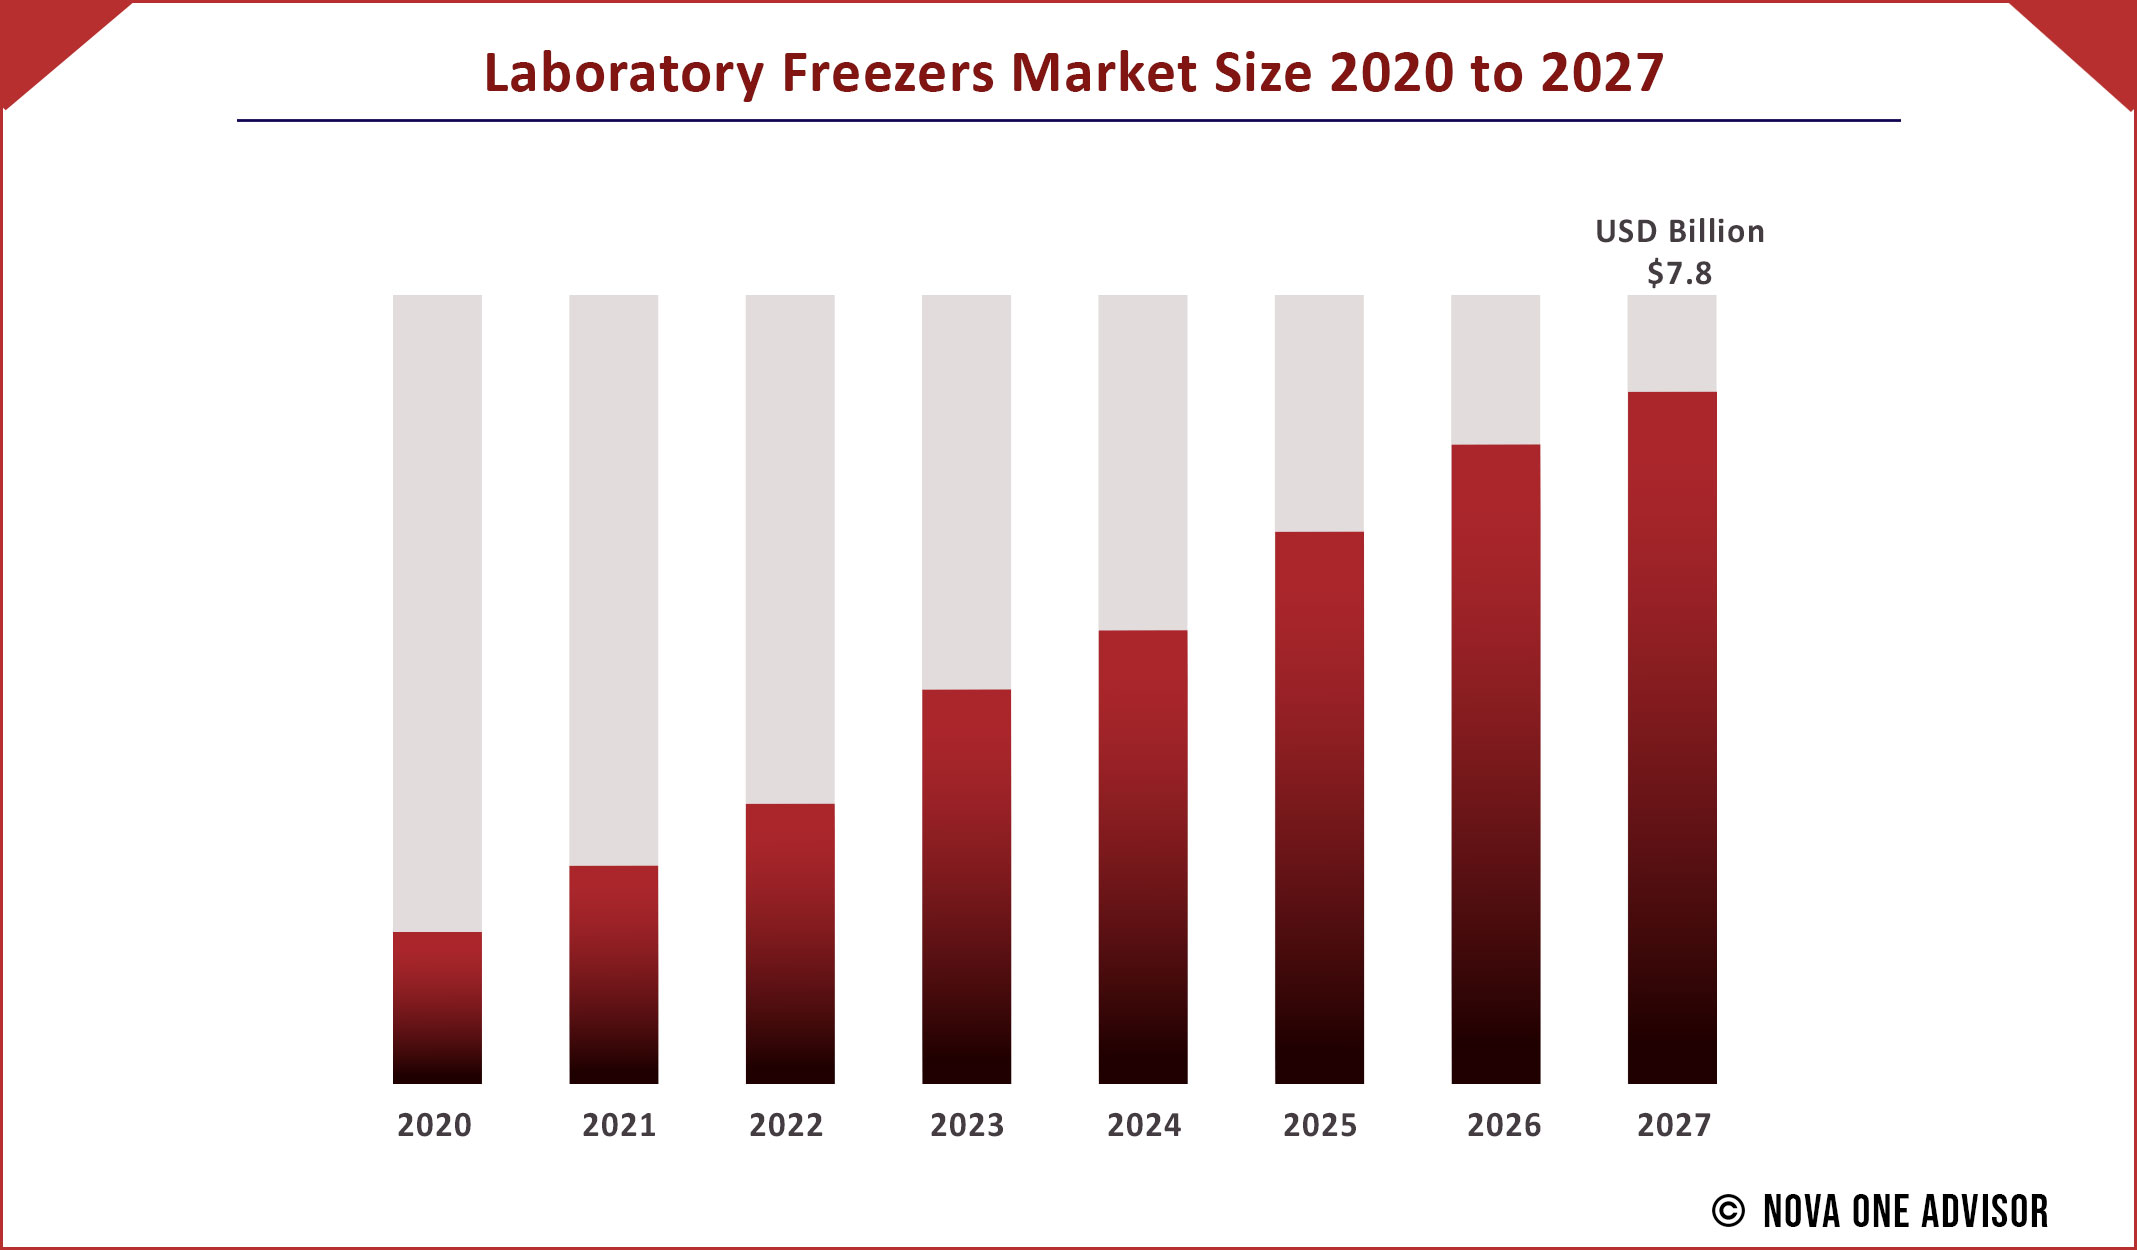 Laboratory Freezers Market Size 2020 to 2027